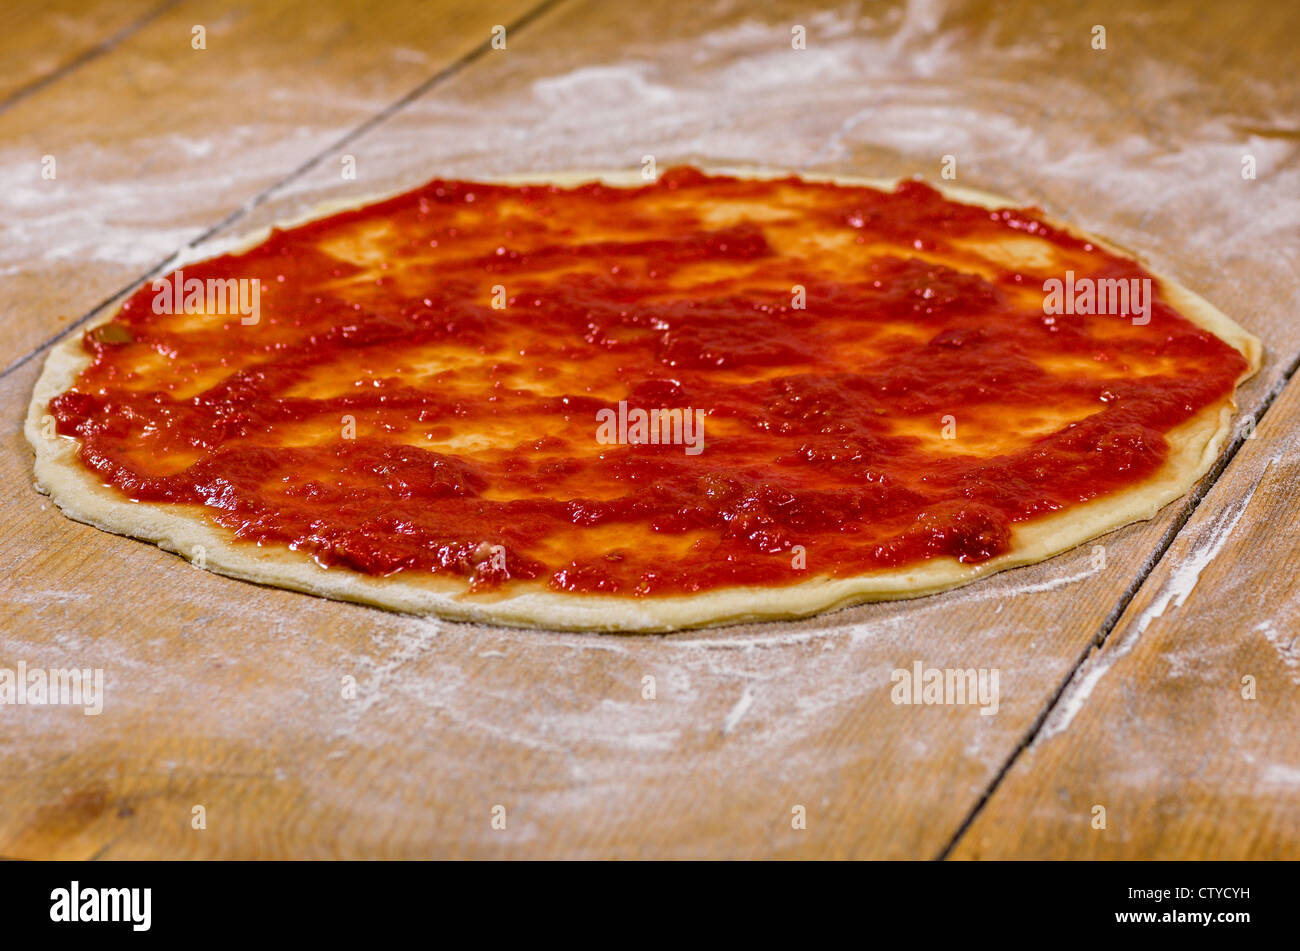 pizza dough with tomato sauce Stock Photo